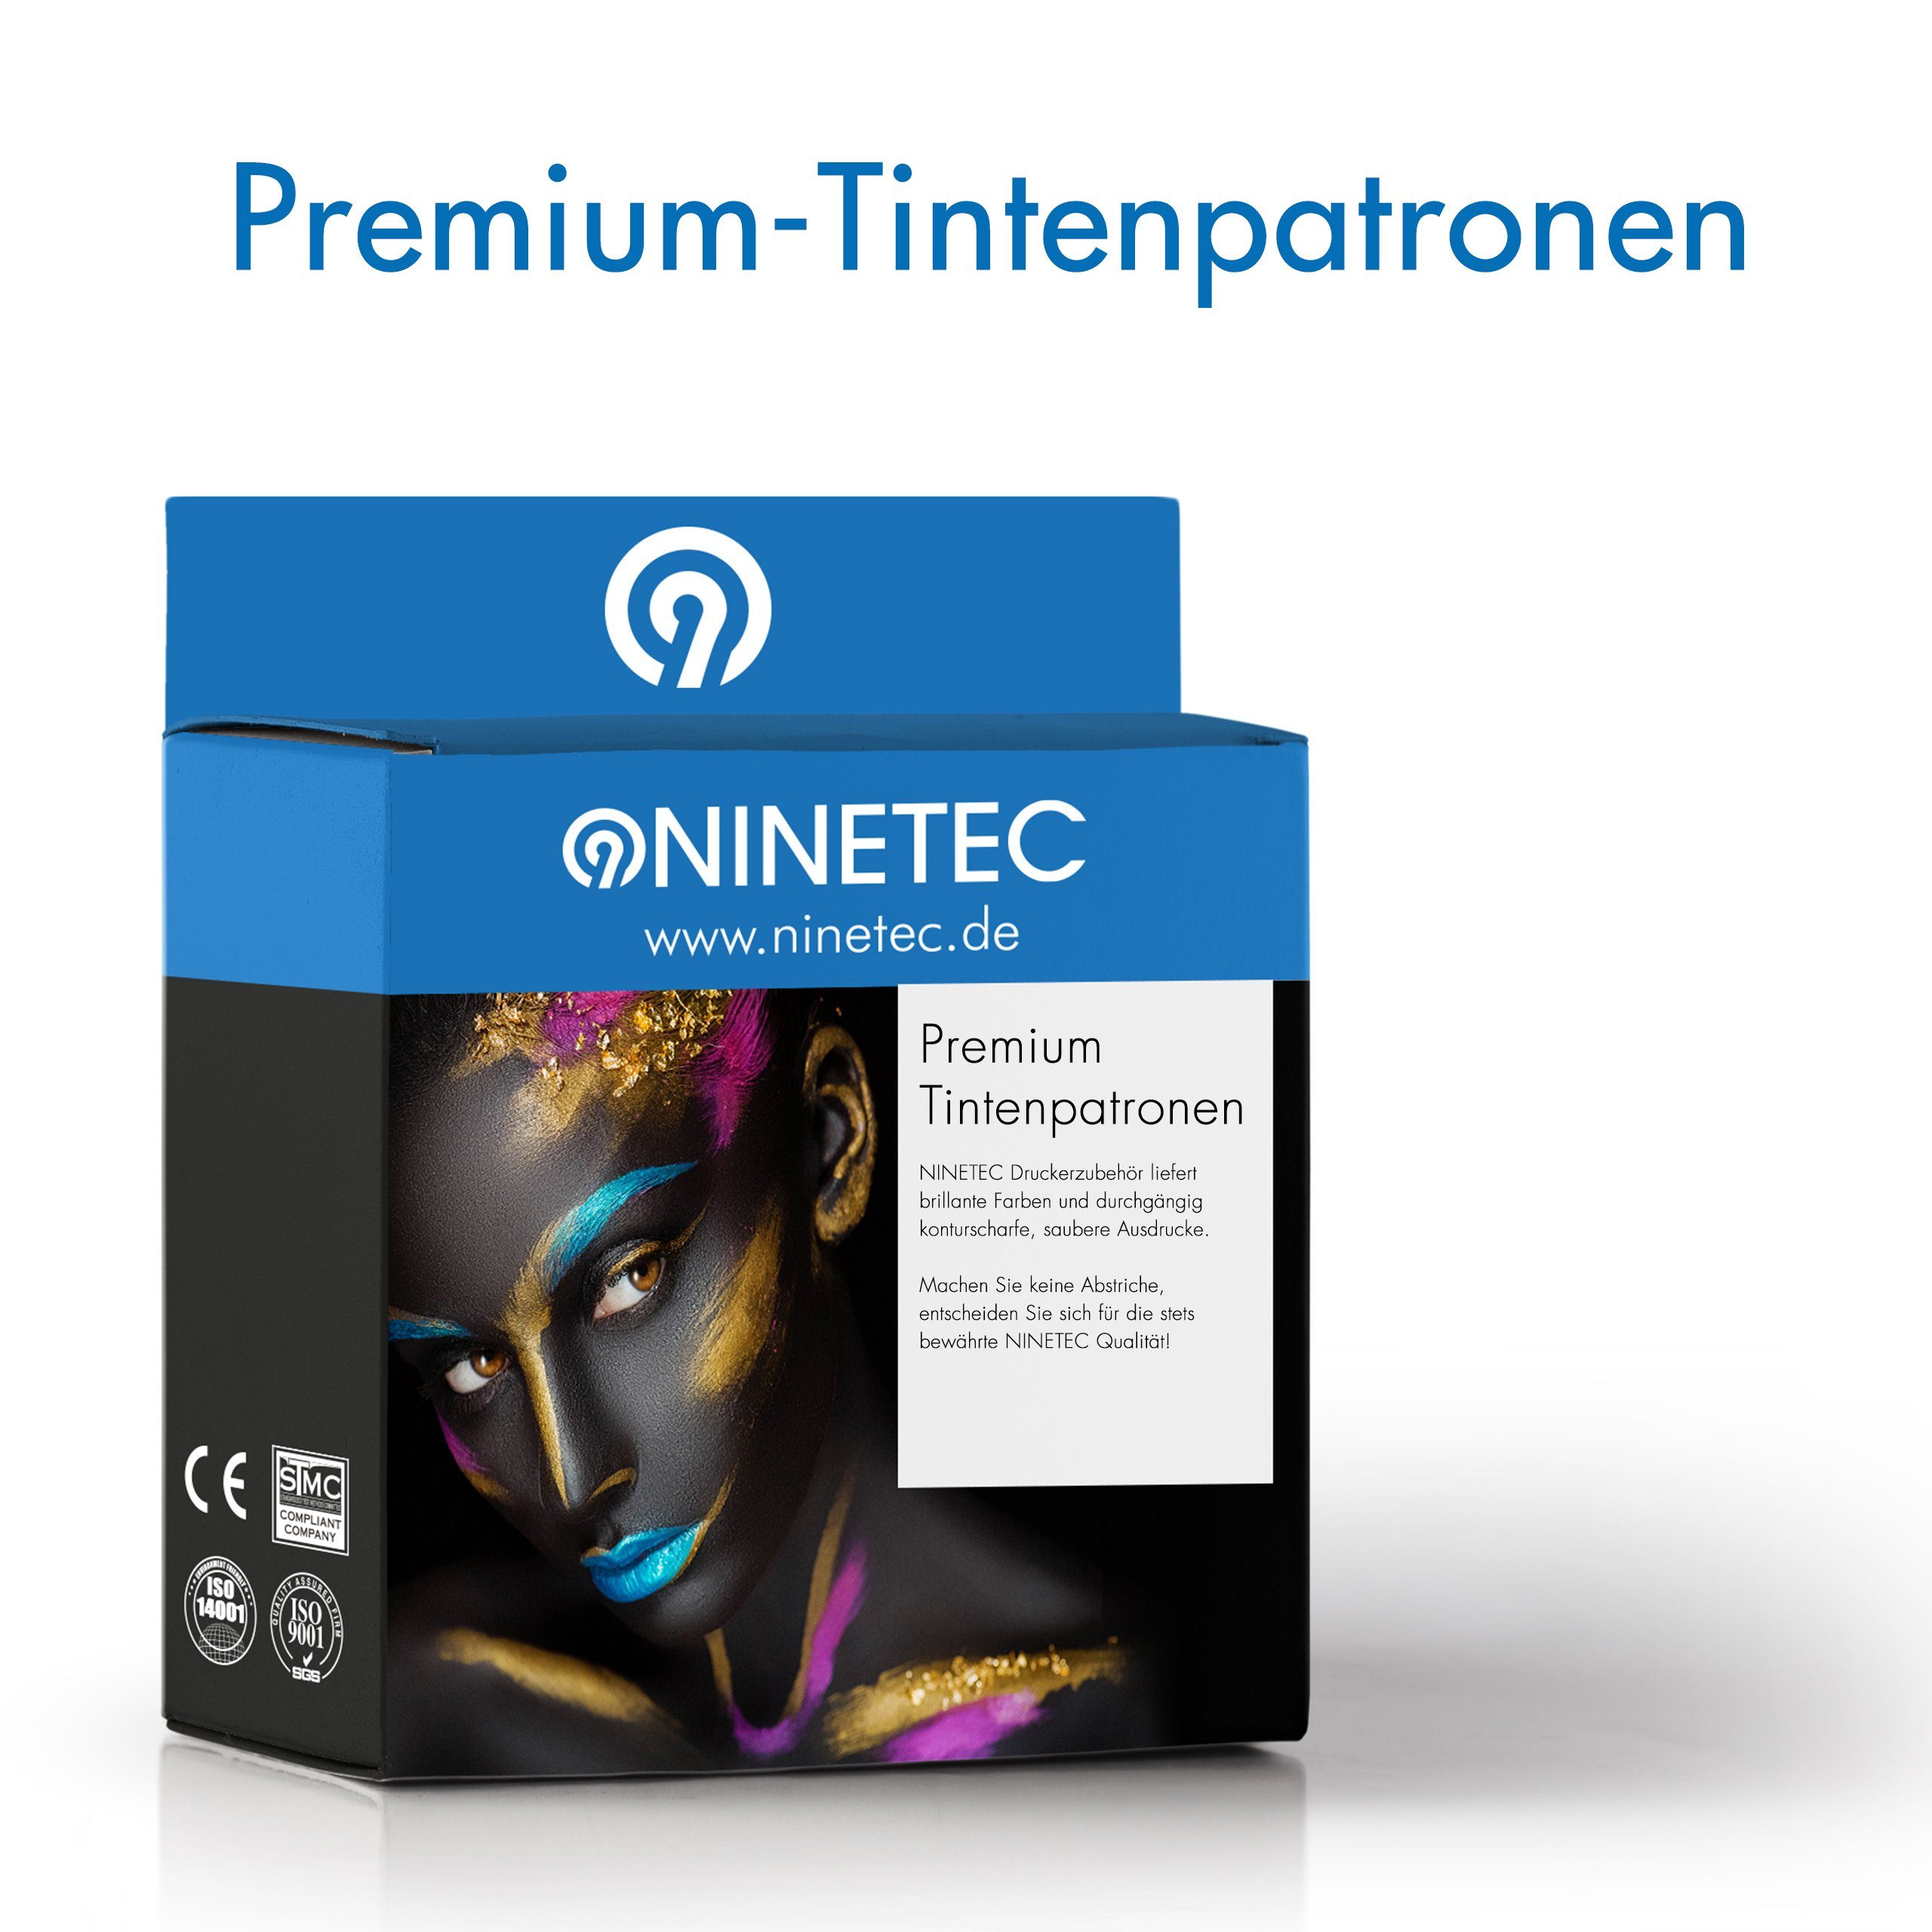 NINETEC ersetzt Epson Black T2991 29XL T2991 Tintenpatrone